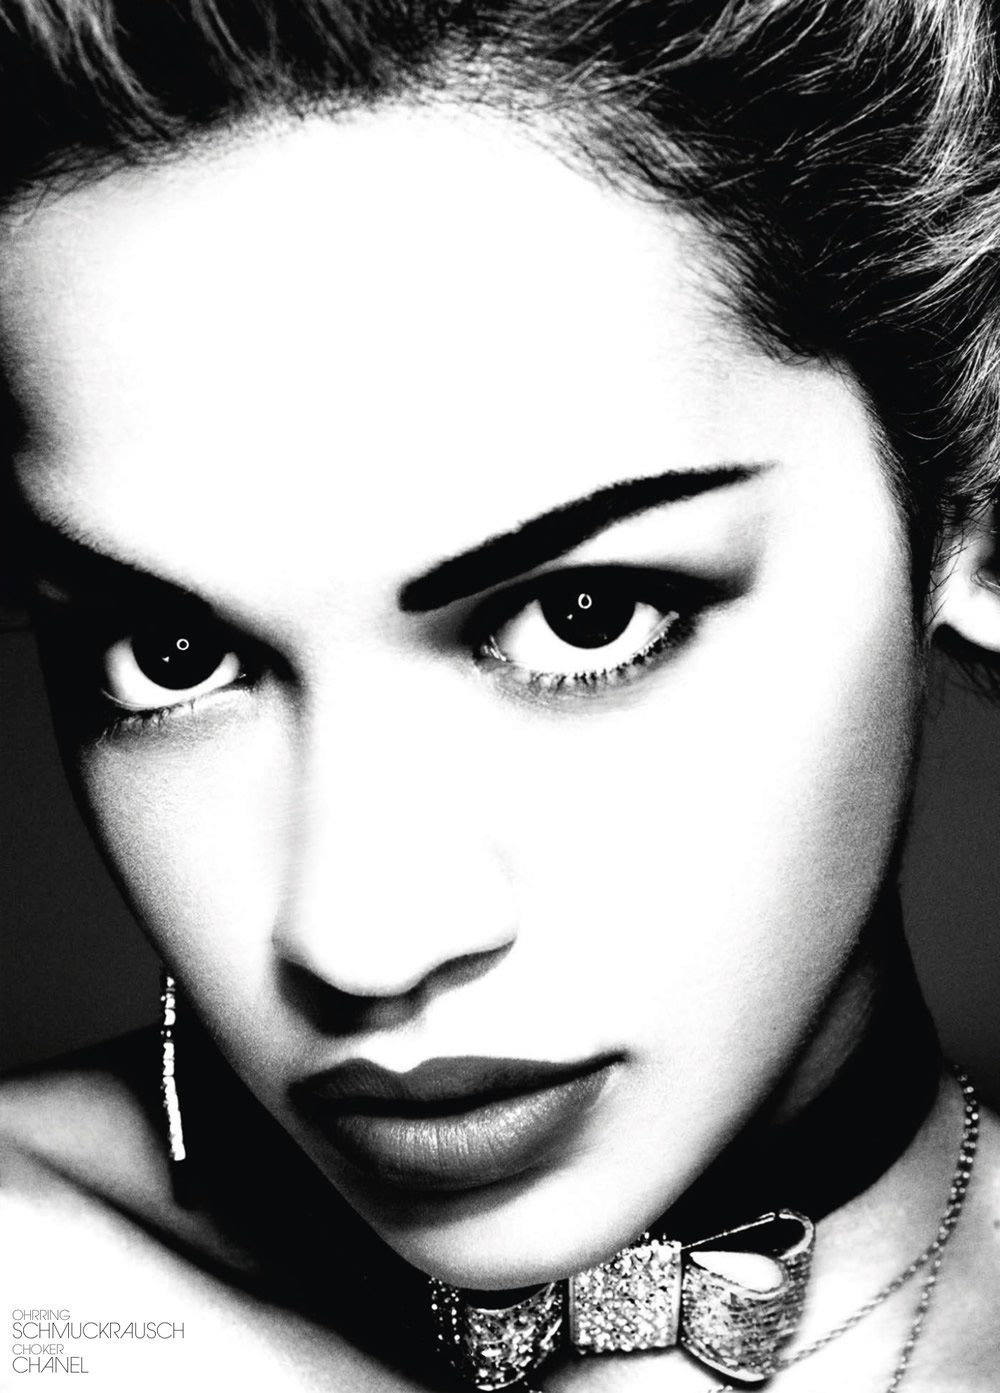 General photo of Rita Ora